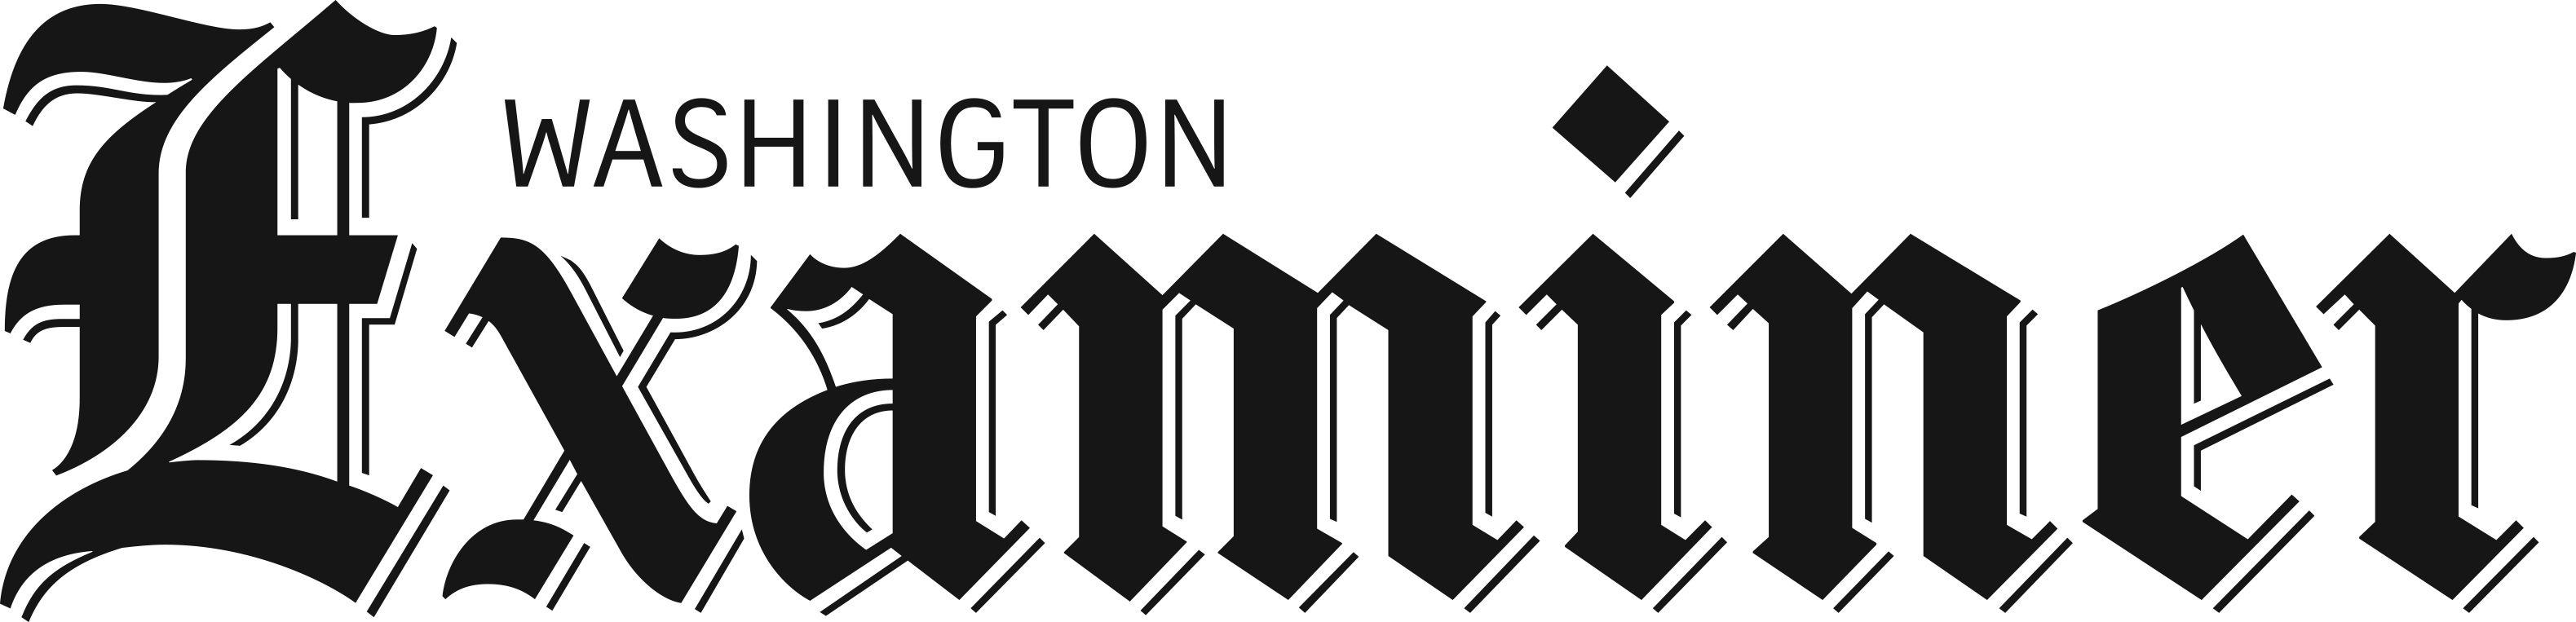 Examiner.com Logo - Washington Examiner: Political News and Analysis About Congress, the ...